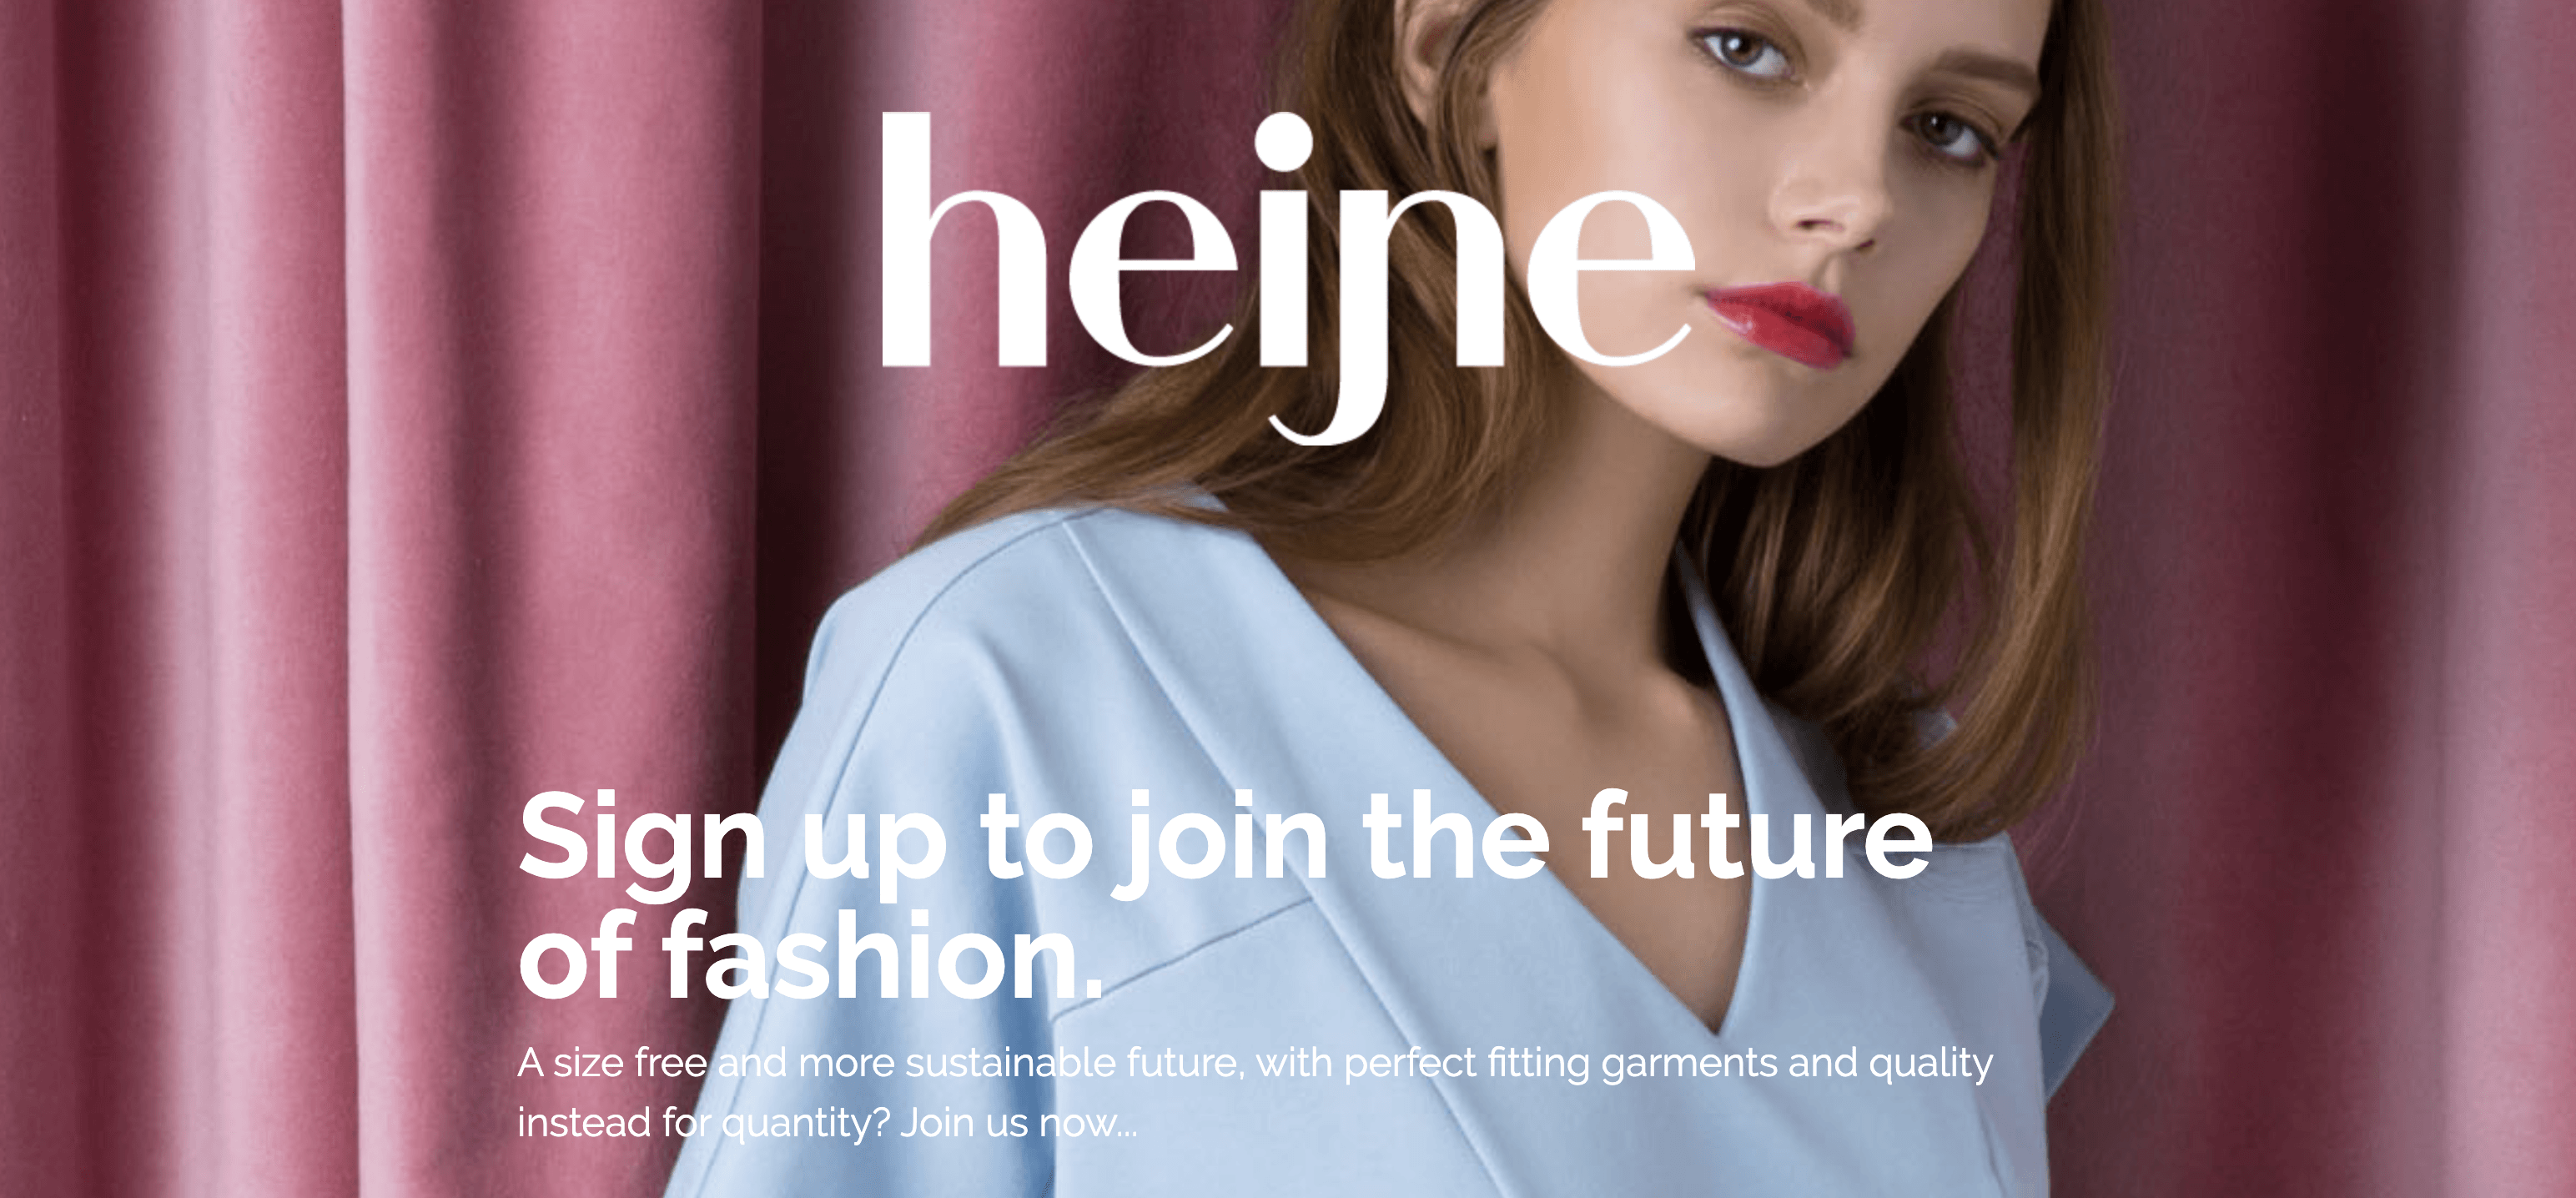 Newsletter sign up for Studio Heijne